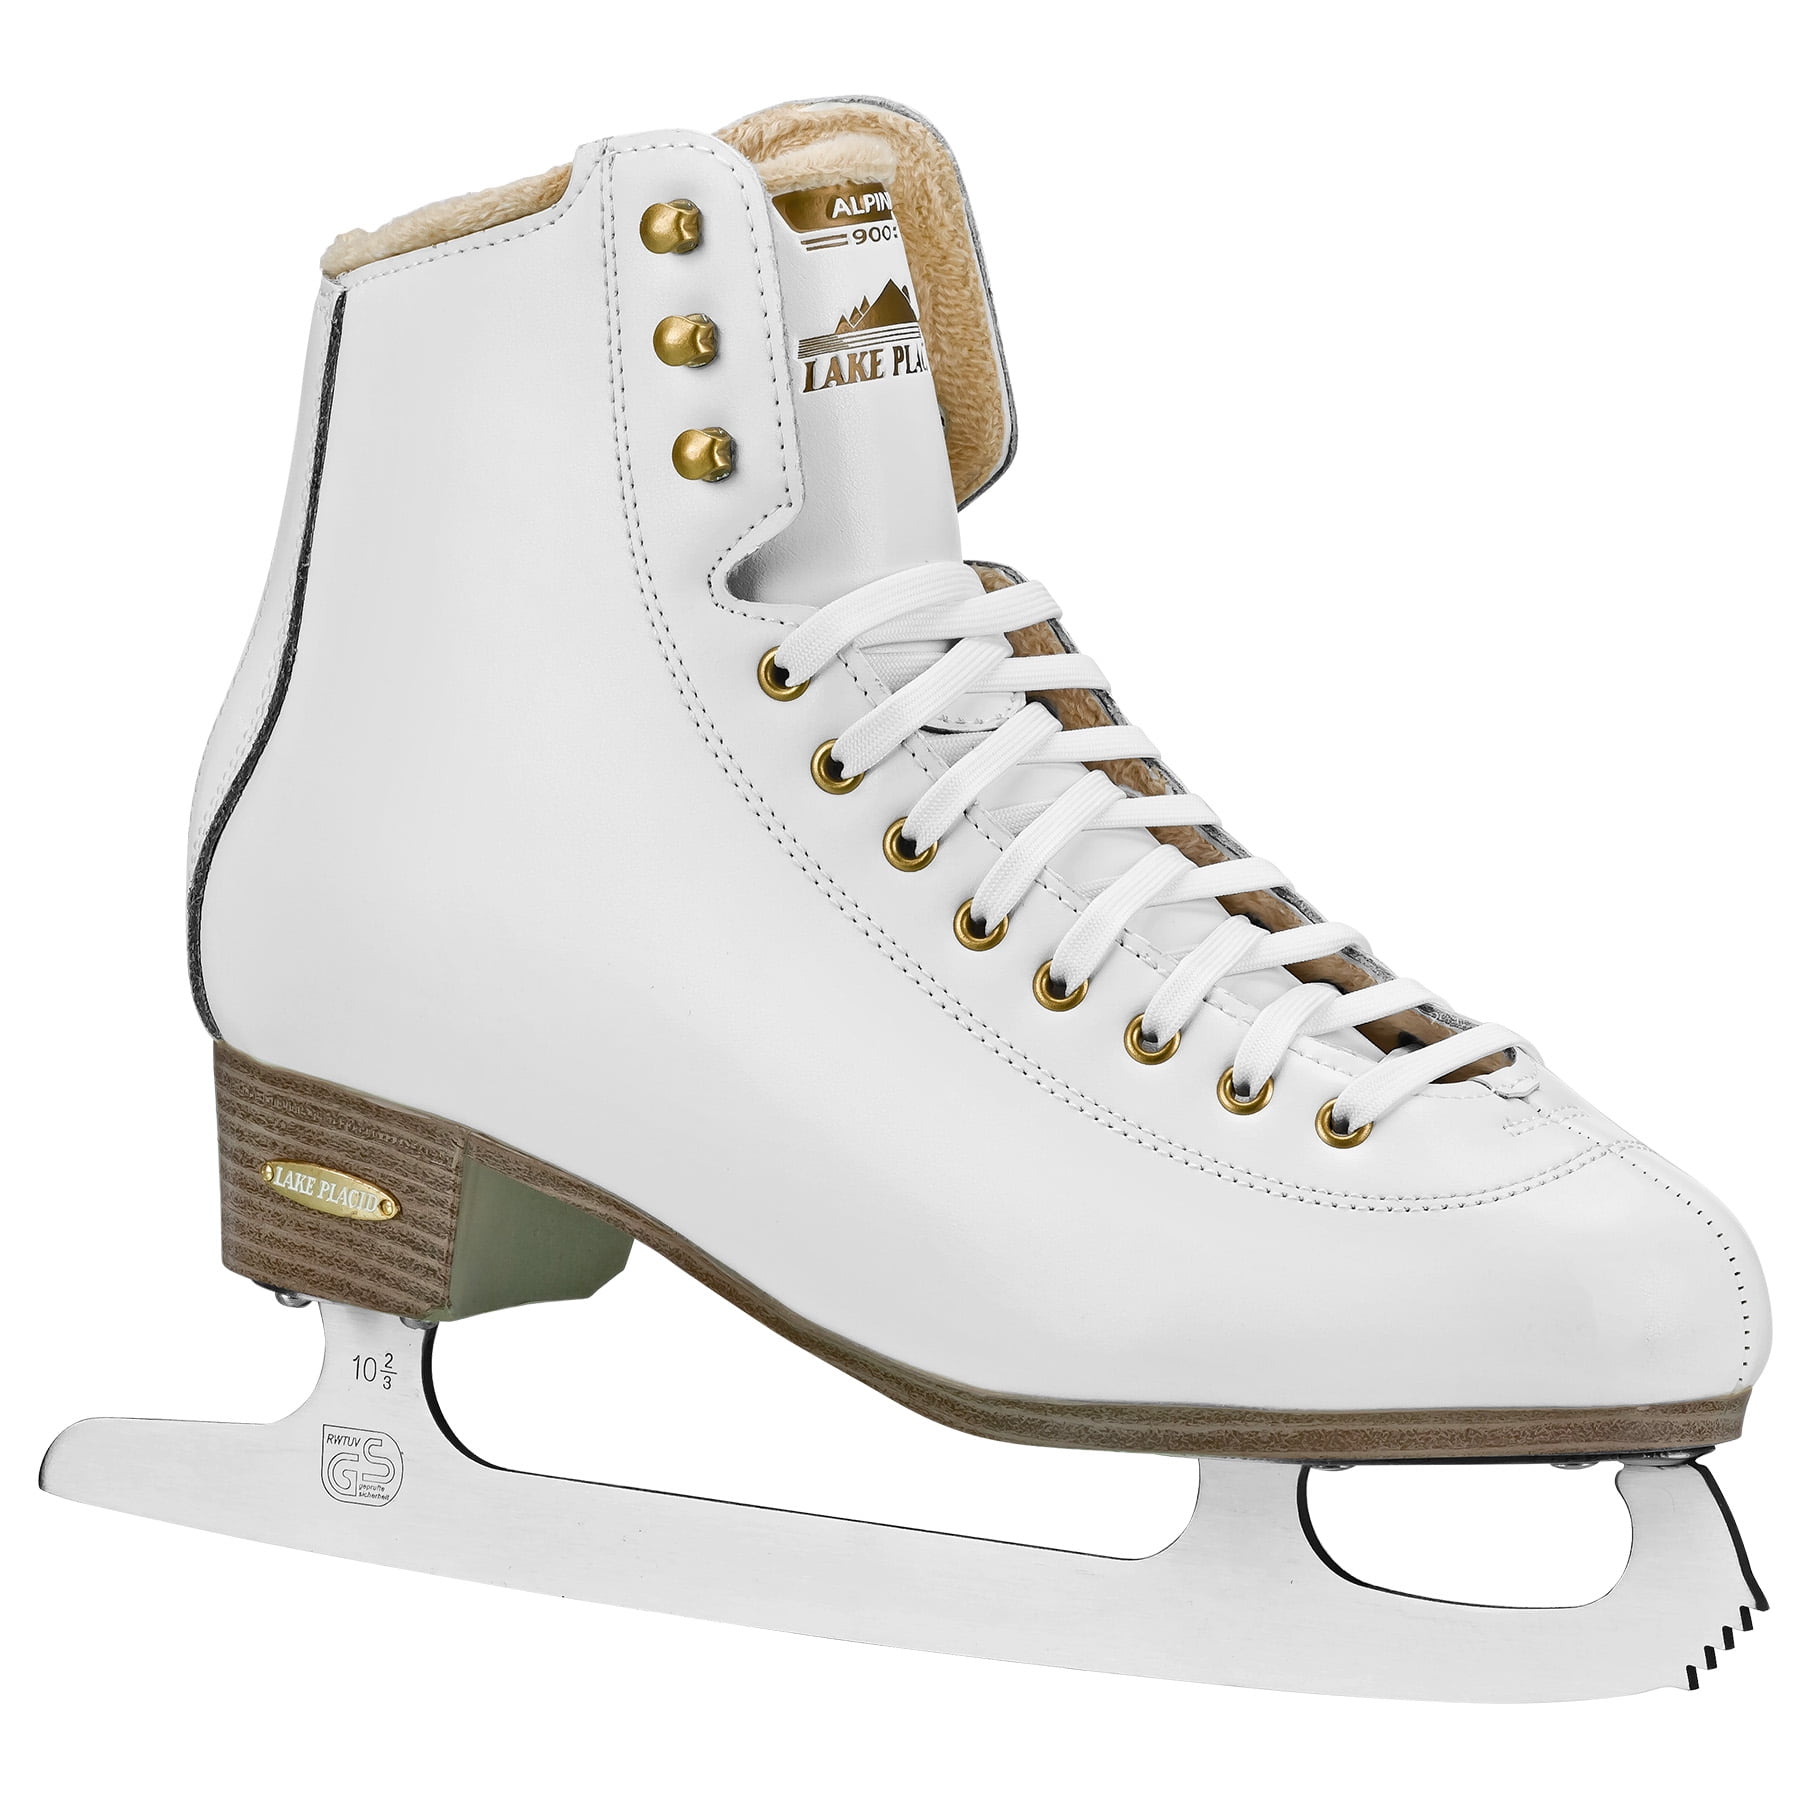 Lake Placid Lp311w Cascade Women's Figure Ice Skate Size 6 for sale online 